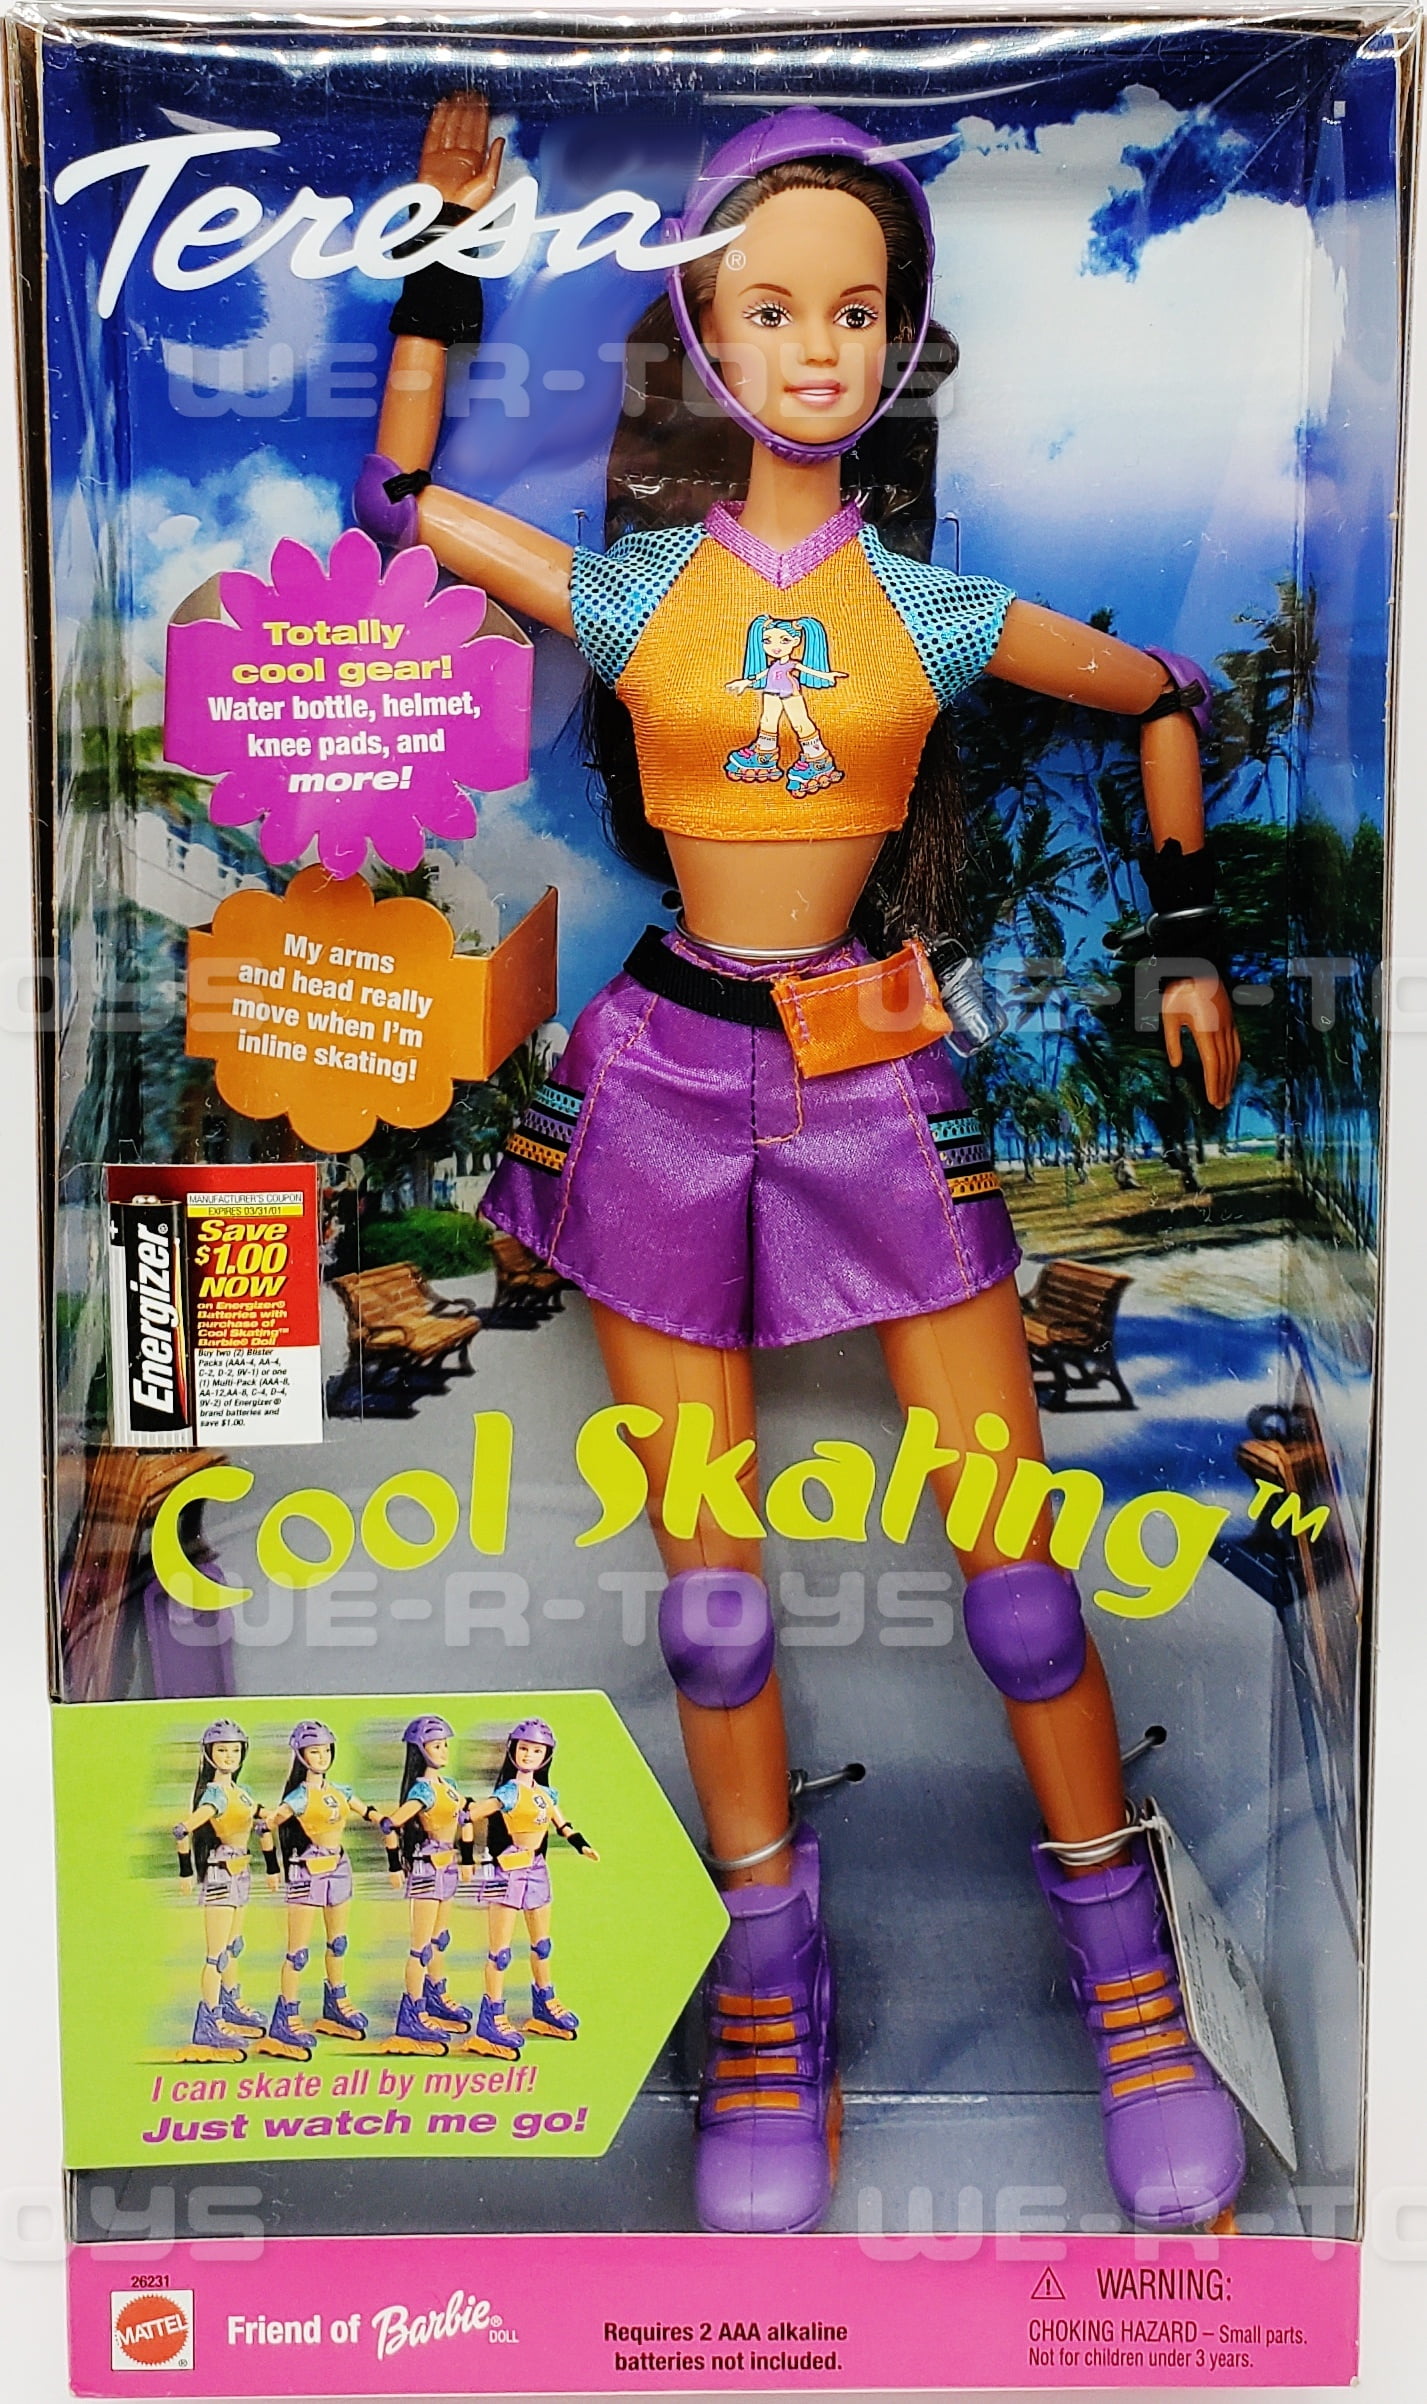 Samlet Ryg, ryg, ryg del syre Barbie Cool Skating Teresa Doll Mattel 1999 #26231 NEW - Walmart.com